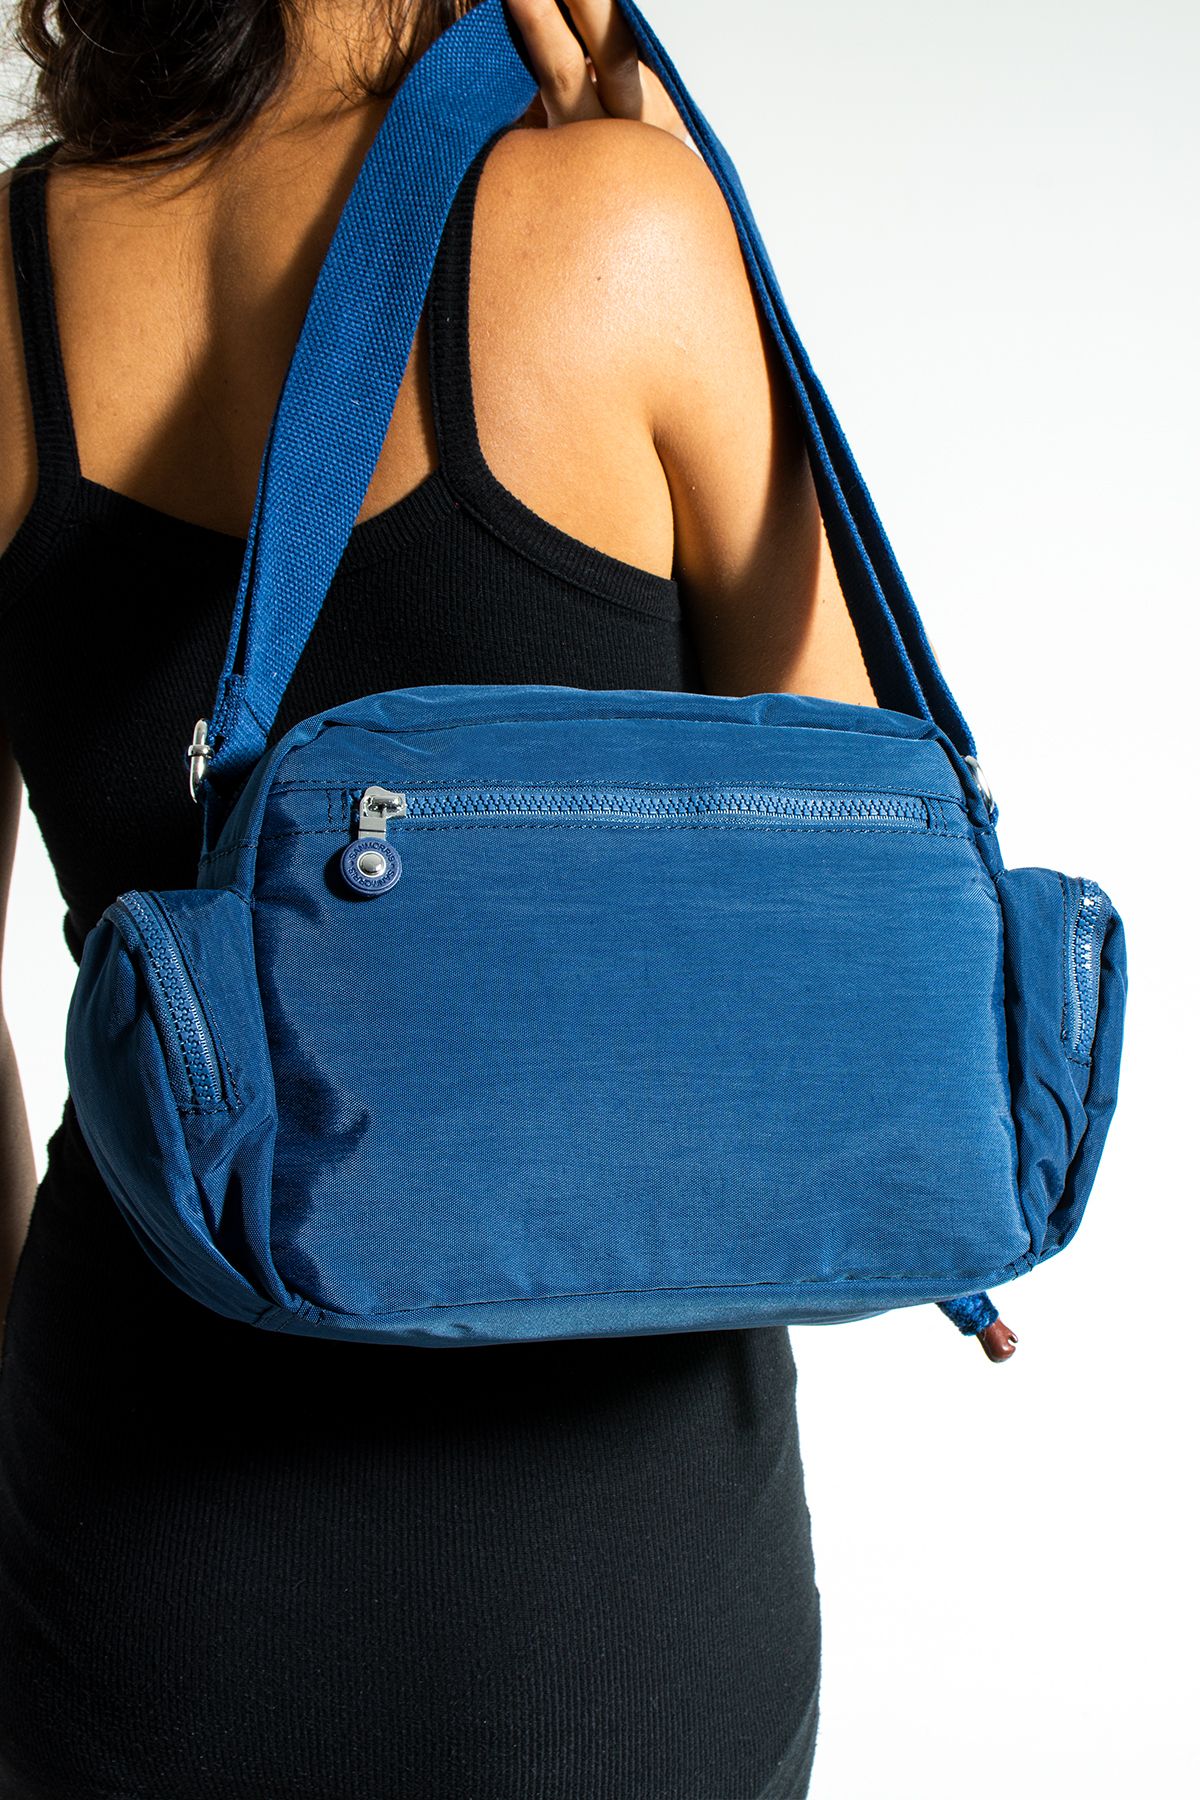 YOGII Shoulder Bag - Dark blue - Plain